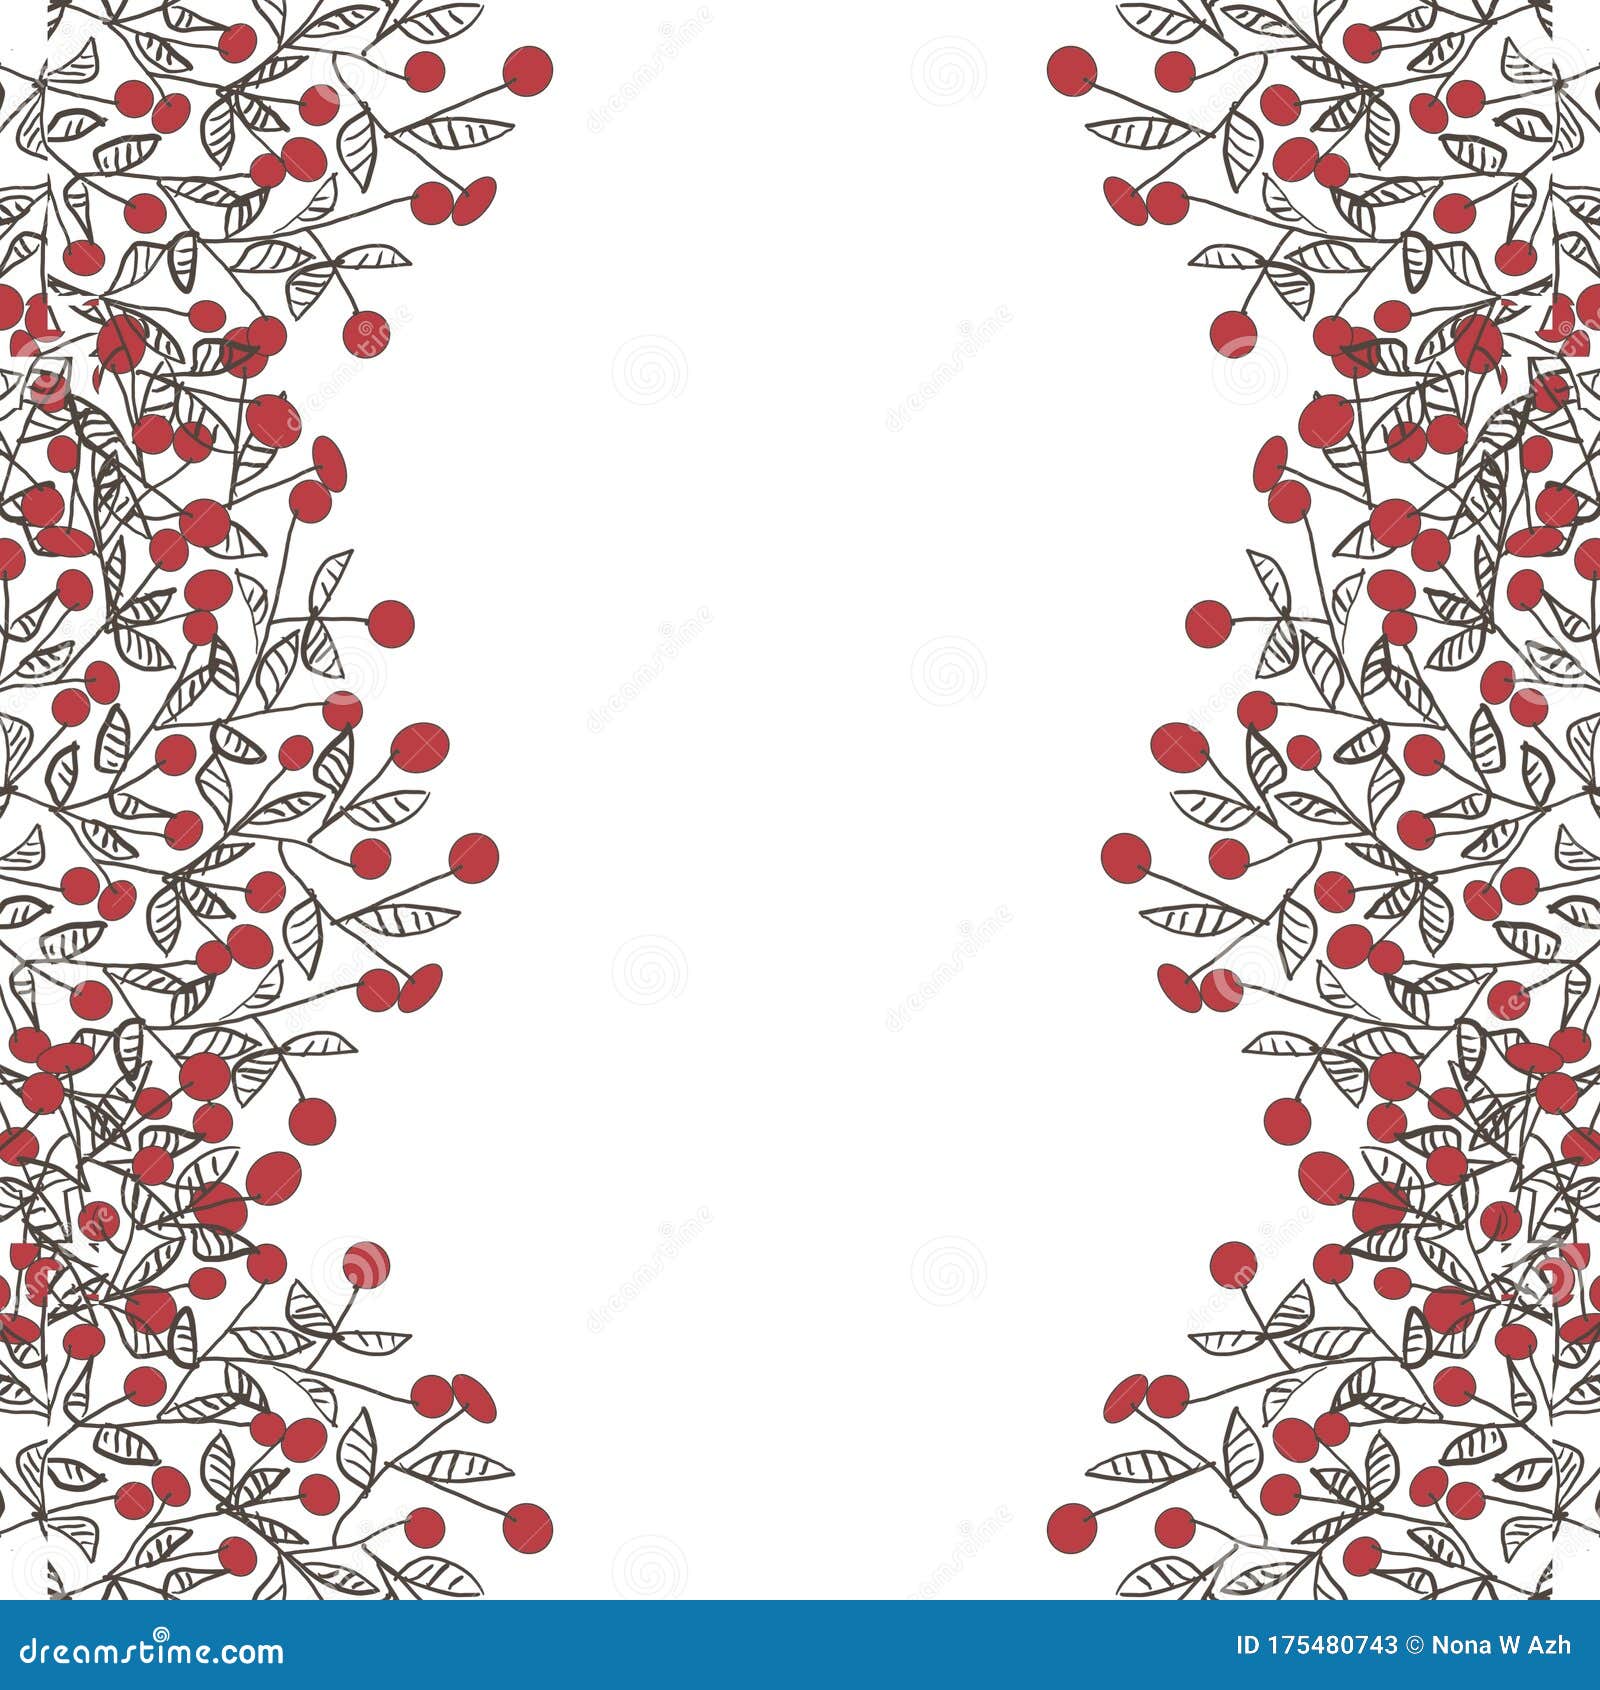 Red Cherry Frame Ilustration Design with White Background. Frame for  Instagram and Social Media Stock Illustration - Illustration of white,  cherry: 175480743